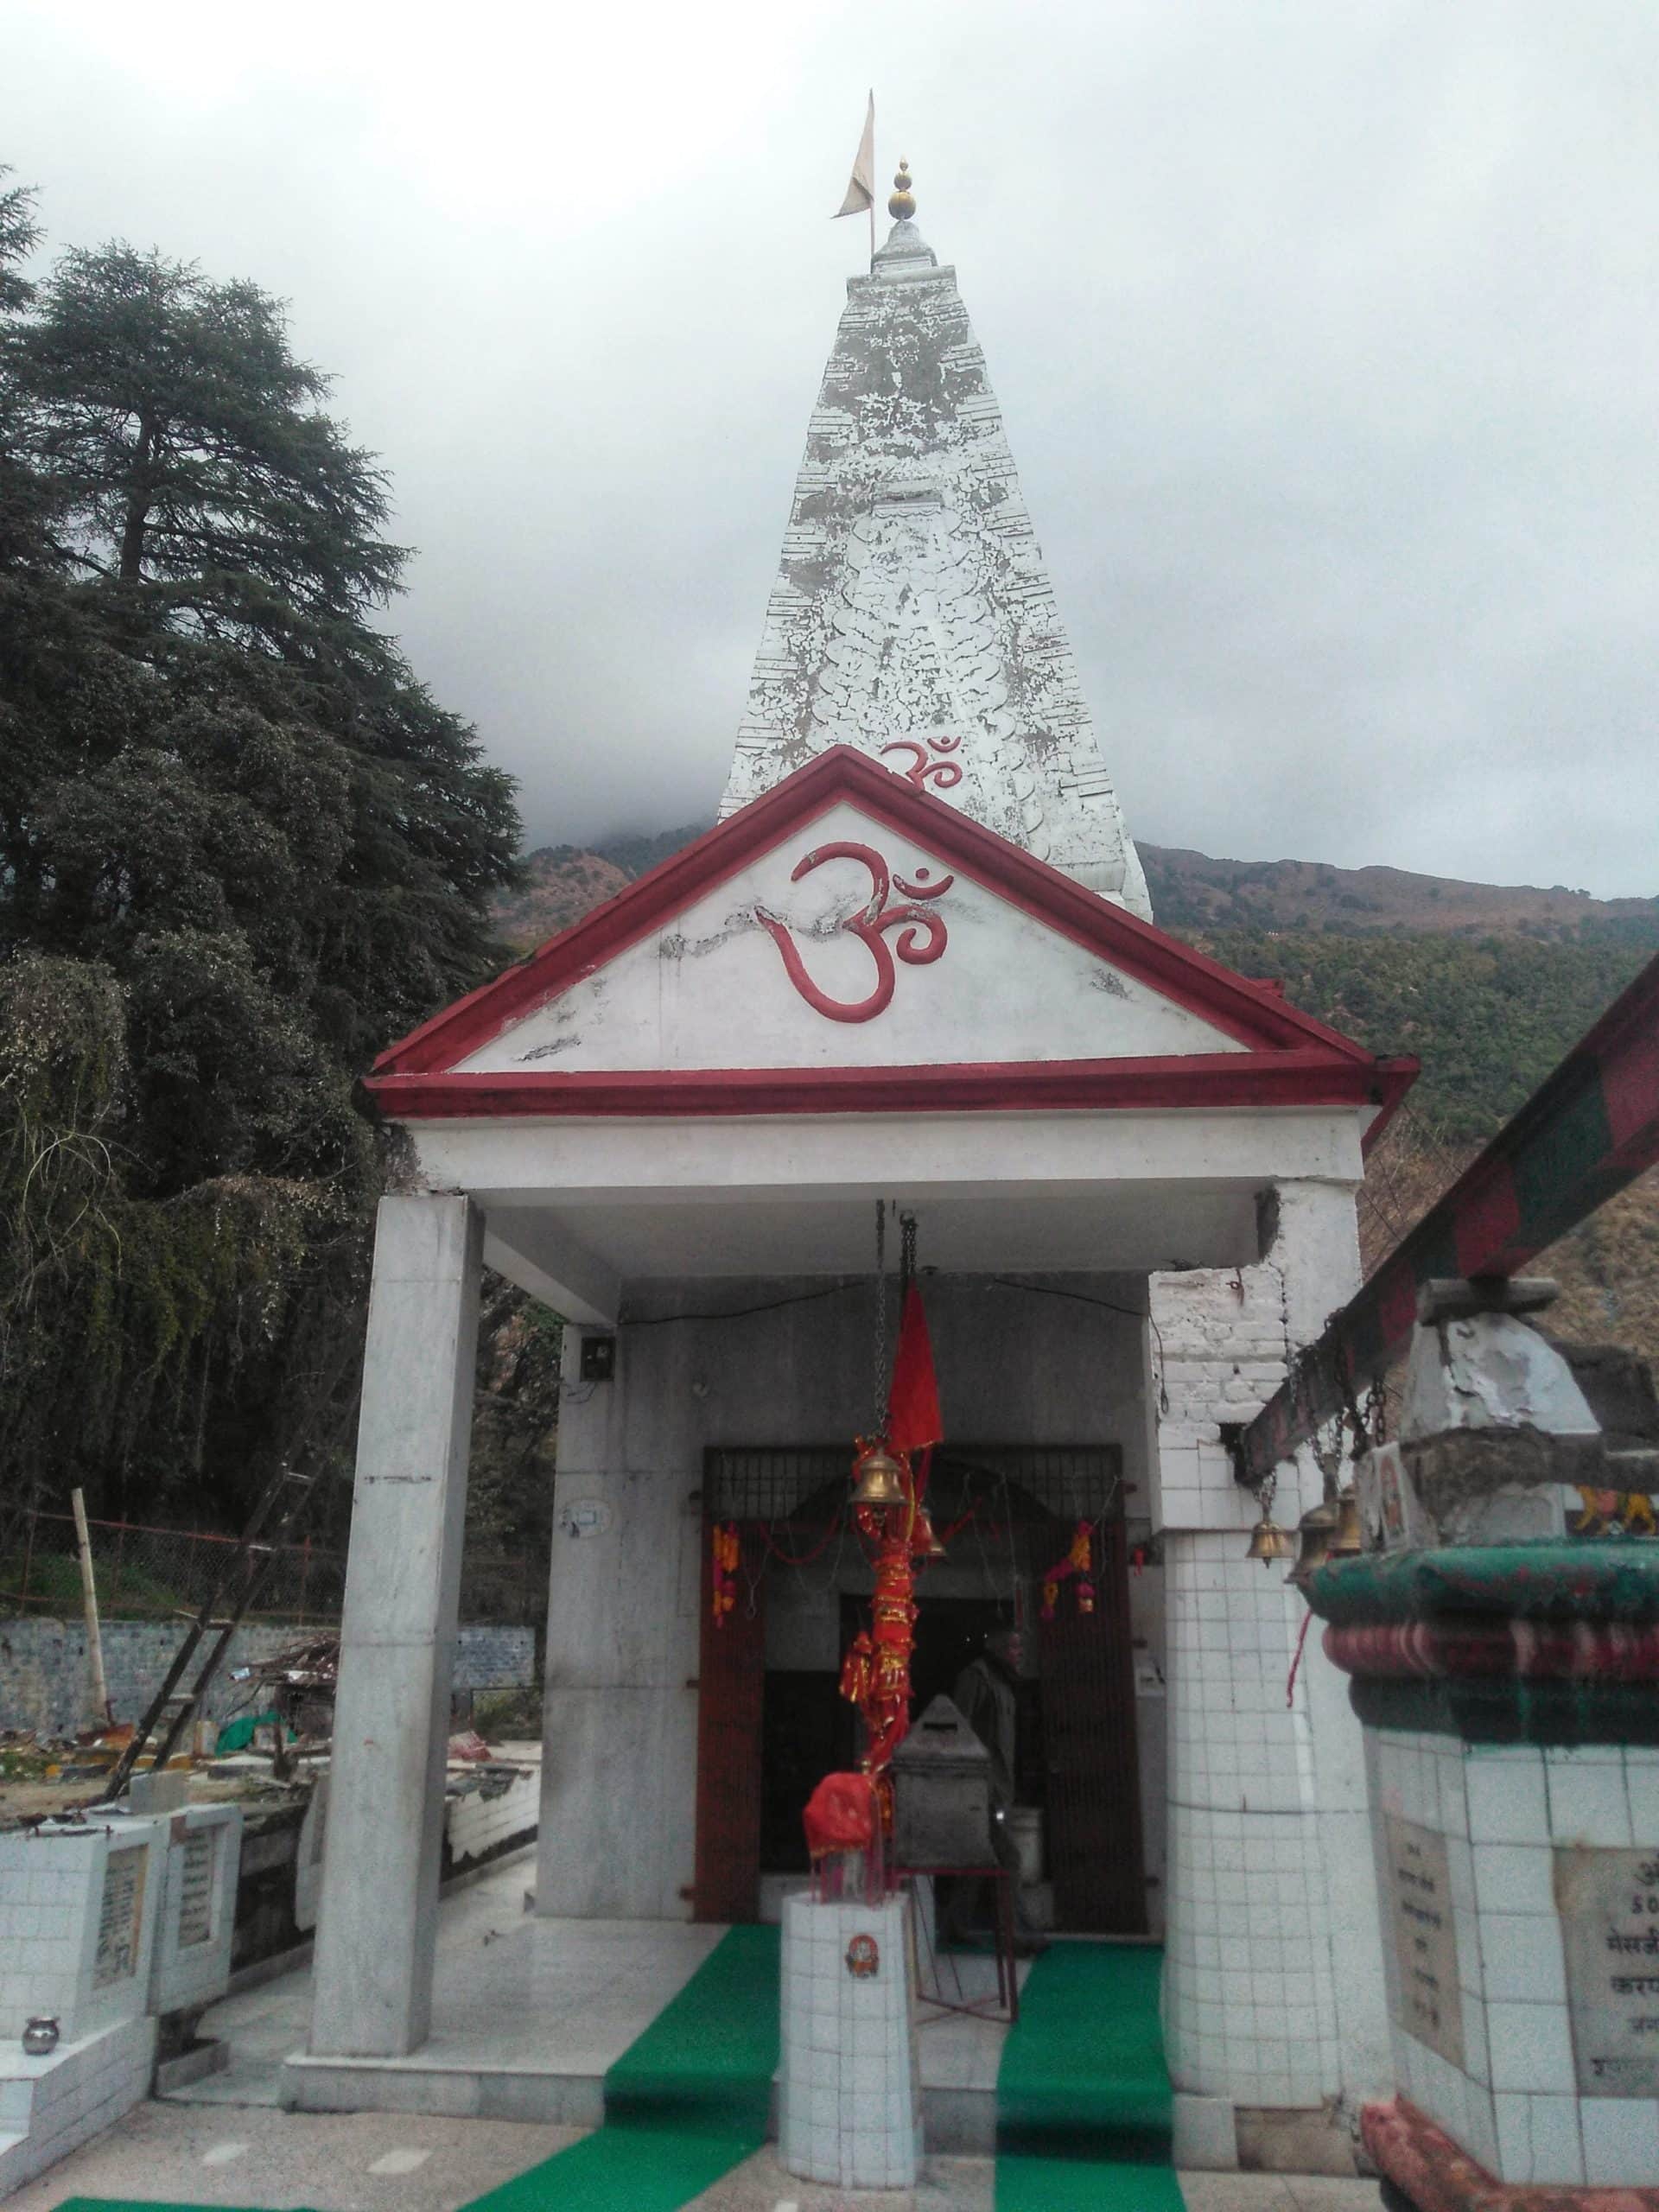 Bhagsunag Temple